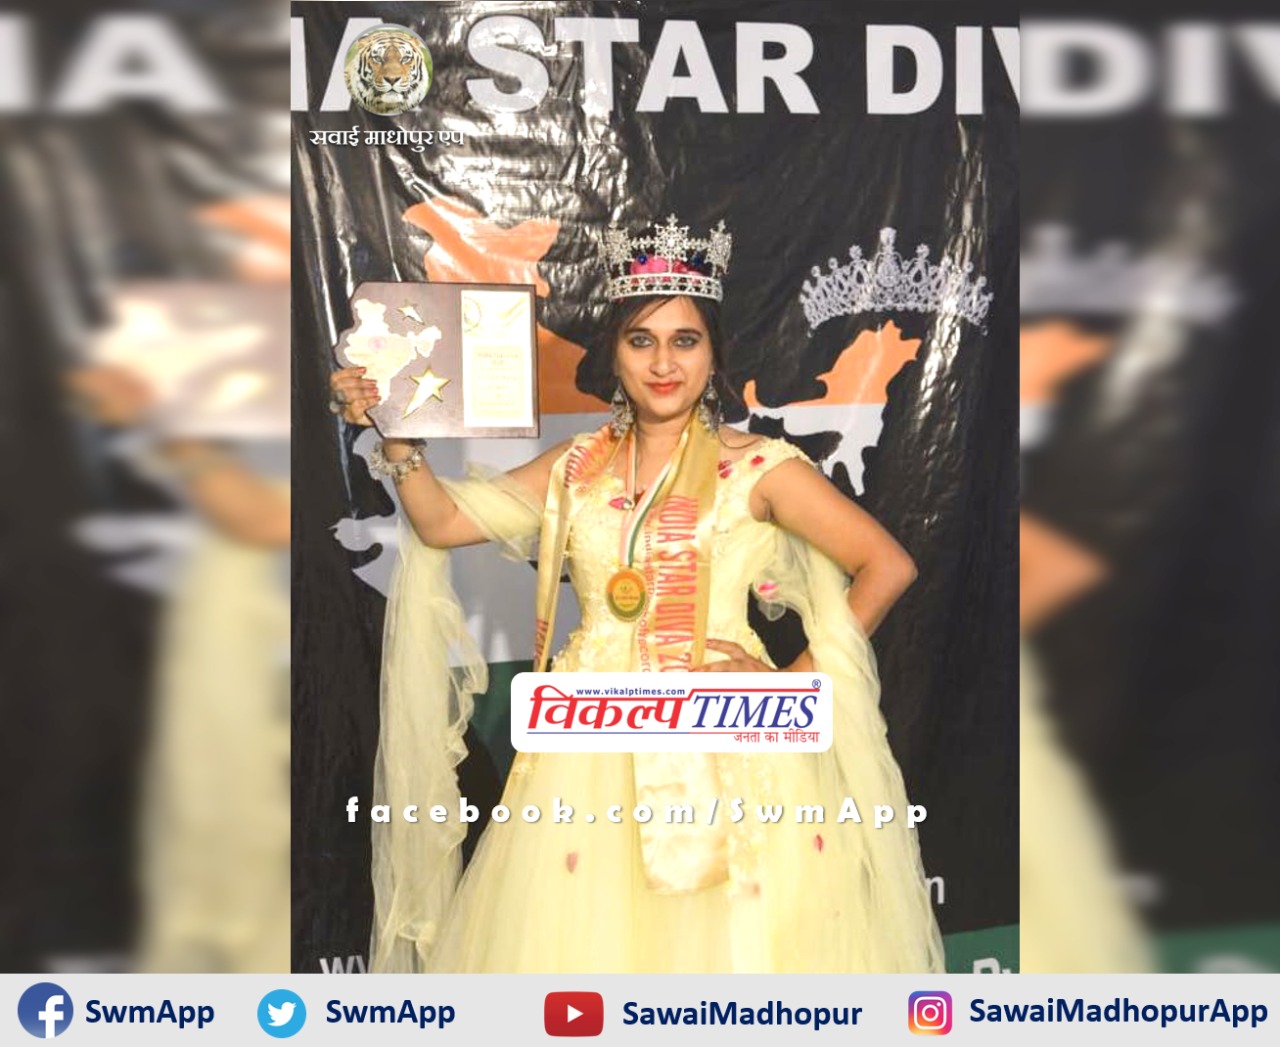 Preeti Meena won the title of India Star Diva